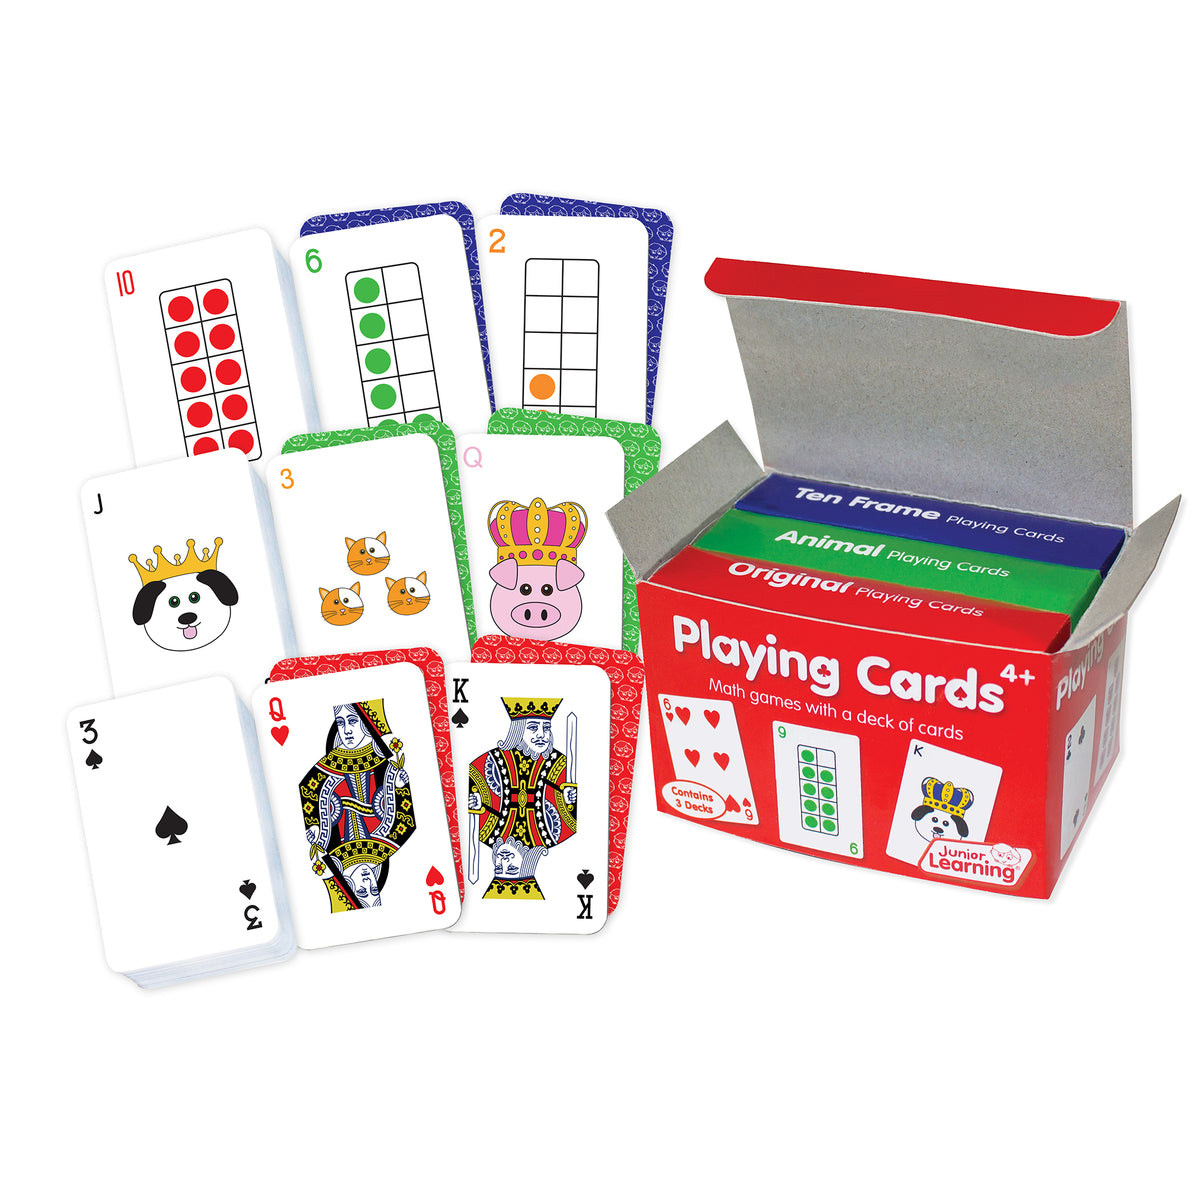 Aritma ConjuDingo CE1 & CE2 – Playing Cards, Combination, 7+ Years